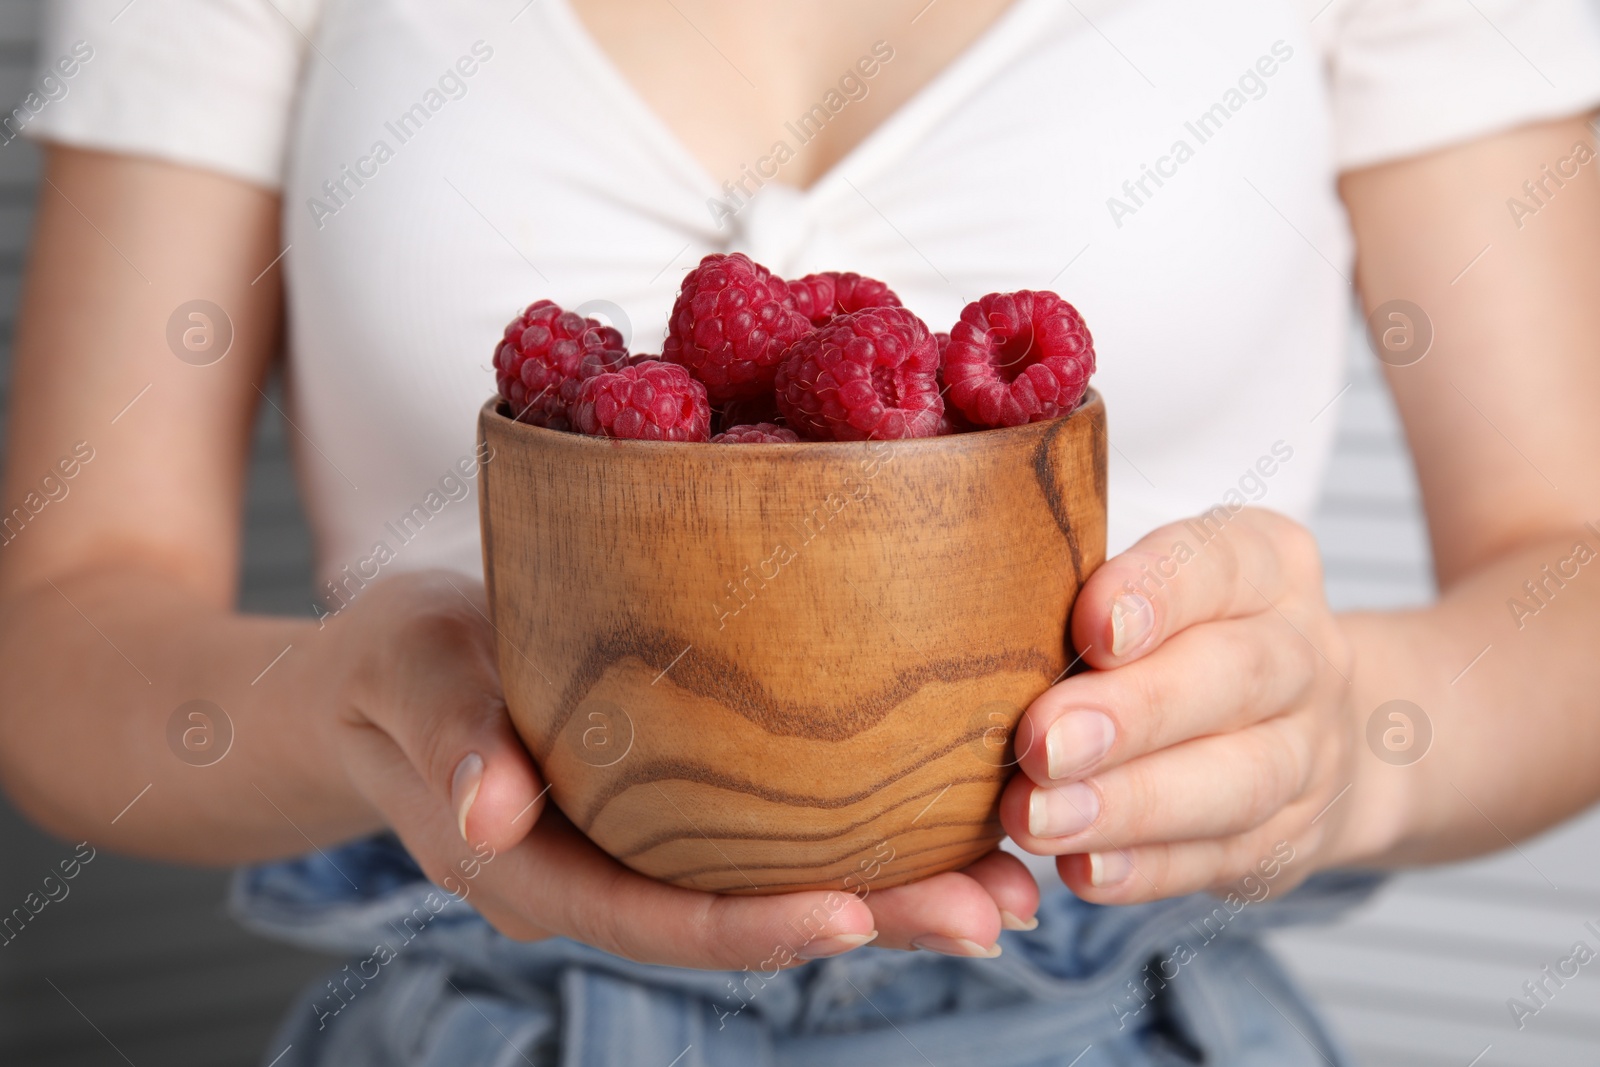 Photo of Woman holding wooden bowl of fresh raspberries, closeup